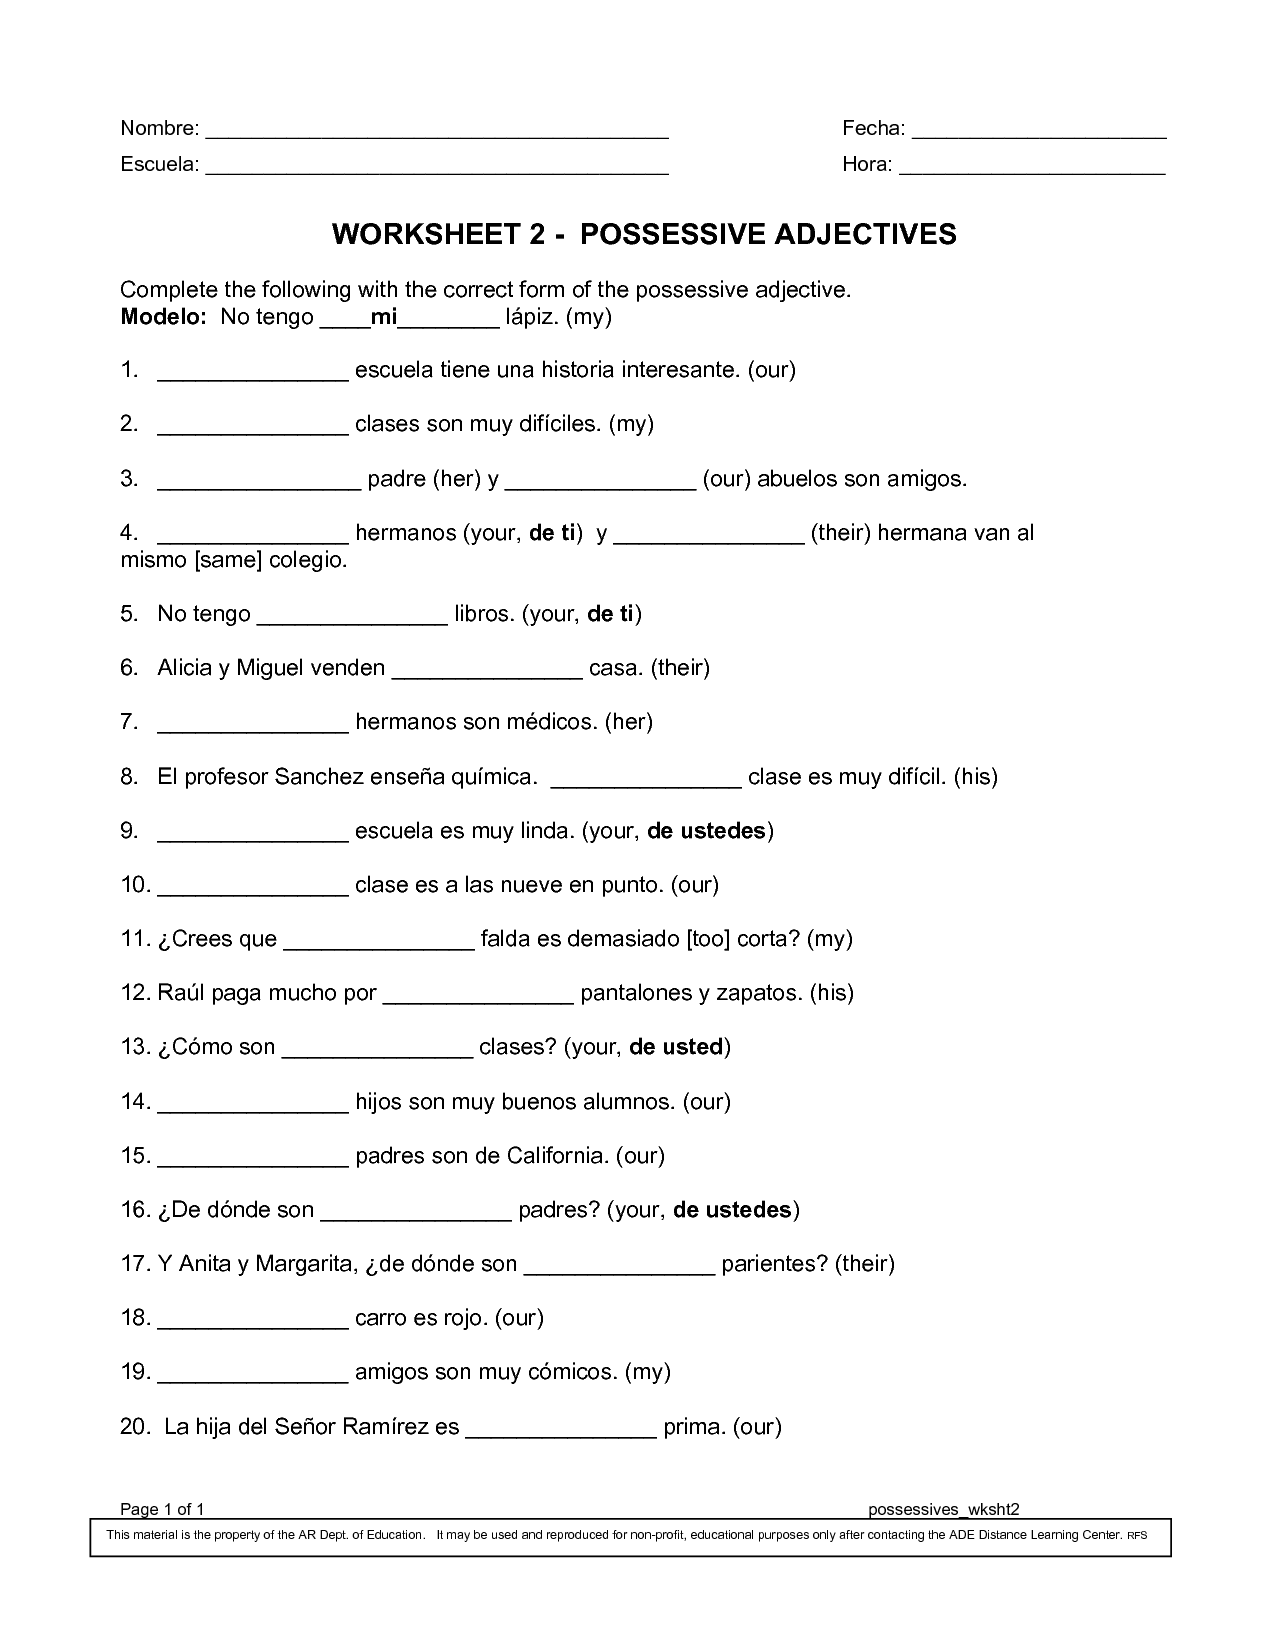 learn-possession-pronoun-possessive-pronoun-possessives-possessive-adjectives